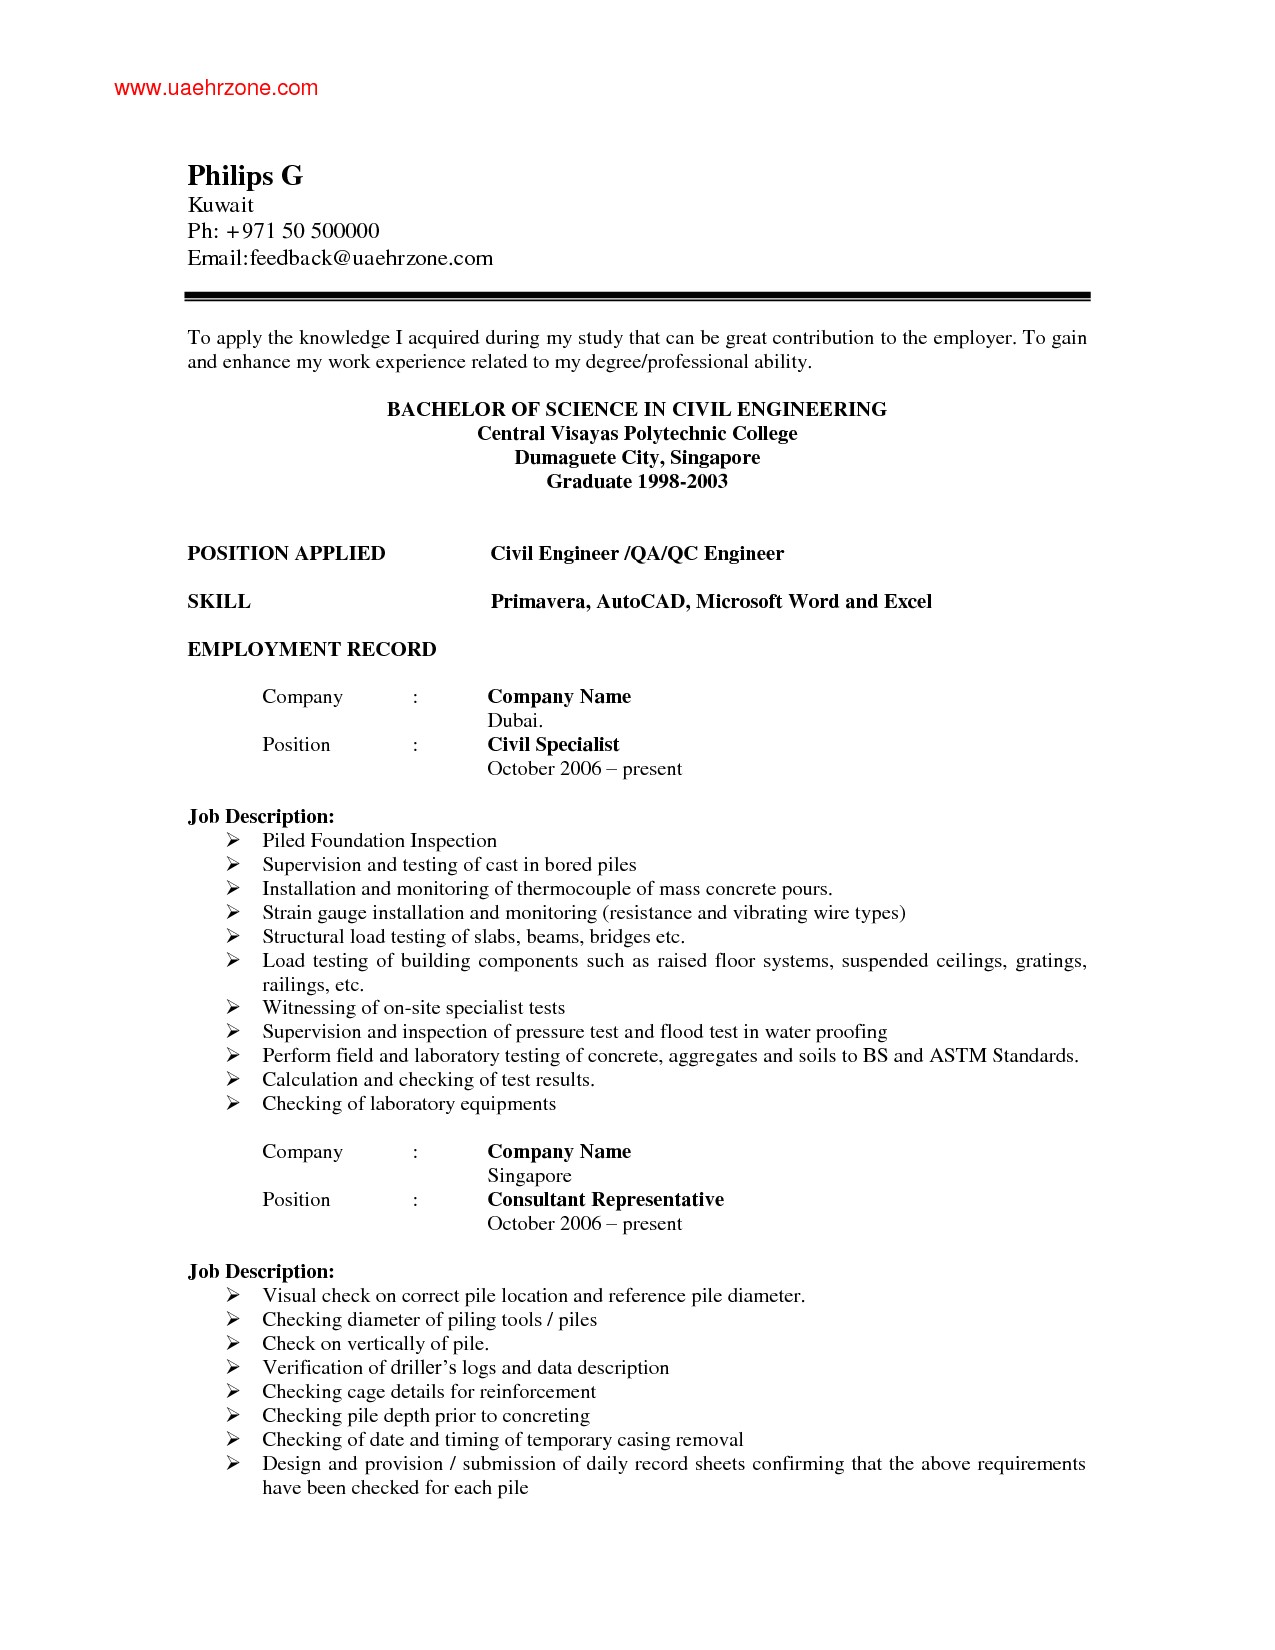 sample resume for civil engineer fresh graduate